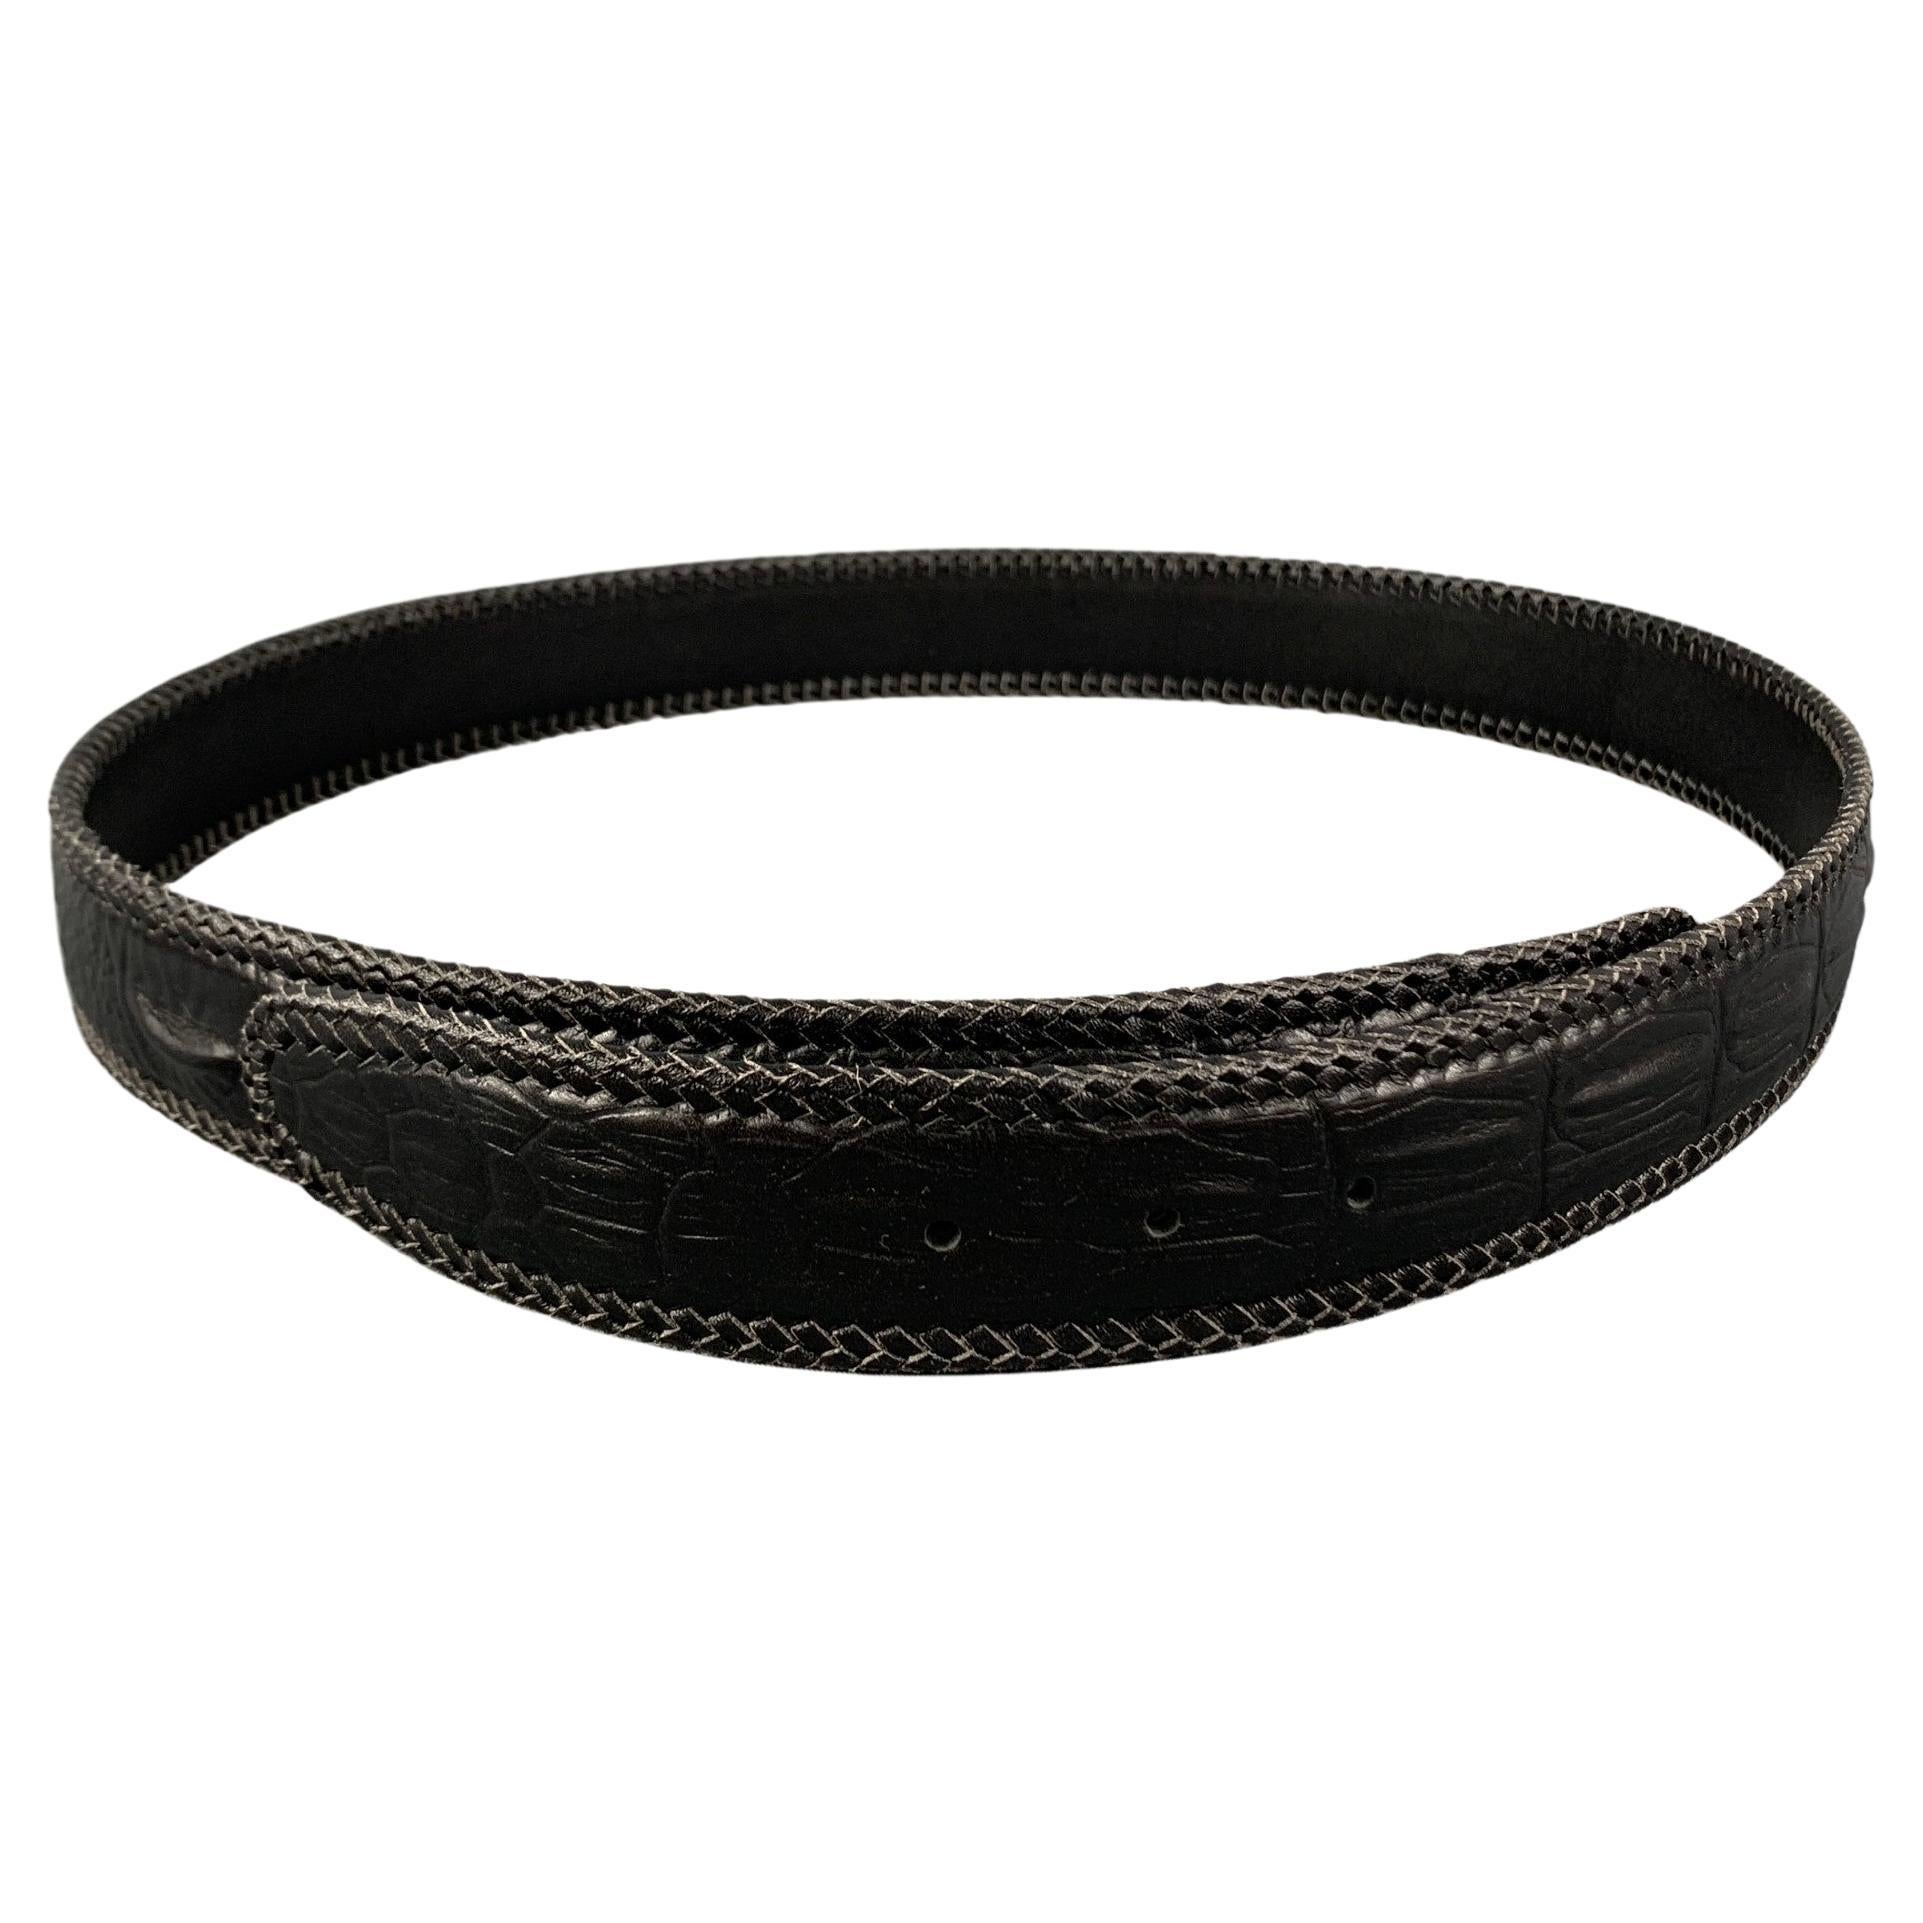 Custom Made Black Textured Alligator Leather Belt Strap